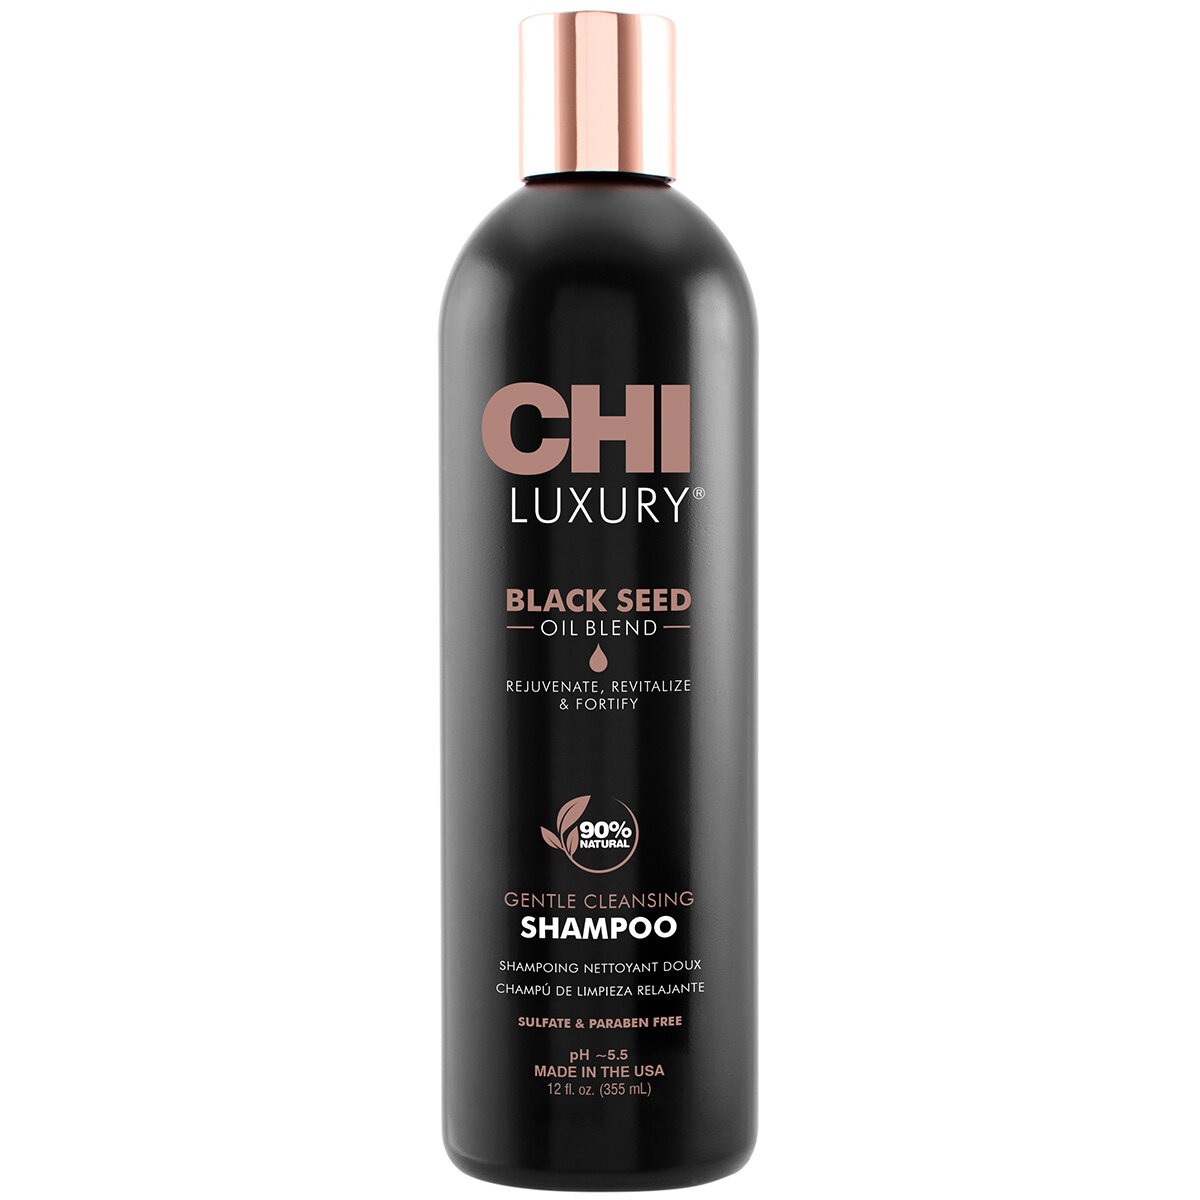 Шампунь для мягкого очищения волос Chi Luxury Black Seed Oil Blend Shampoo, 355 мл